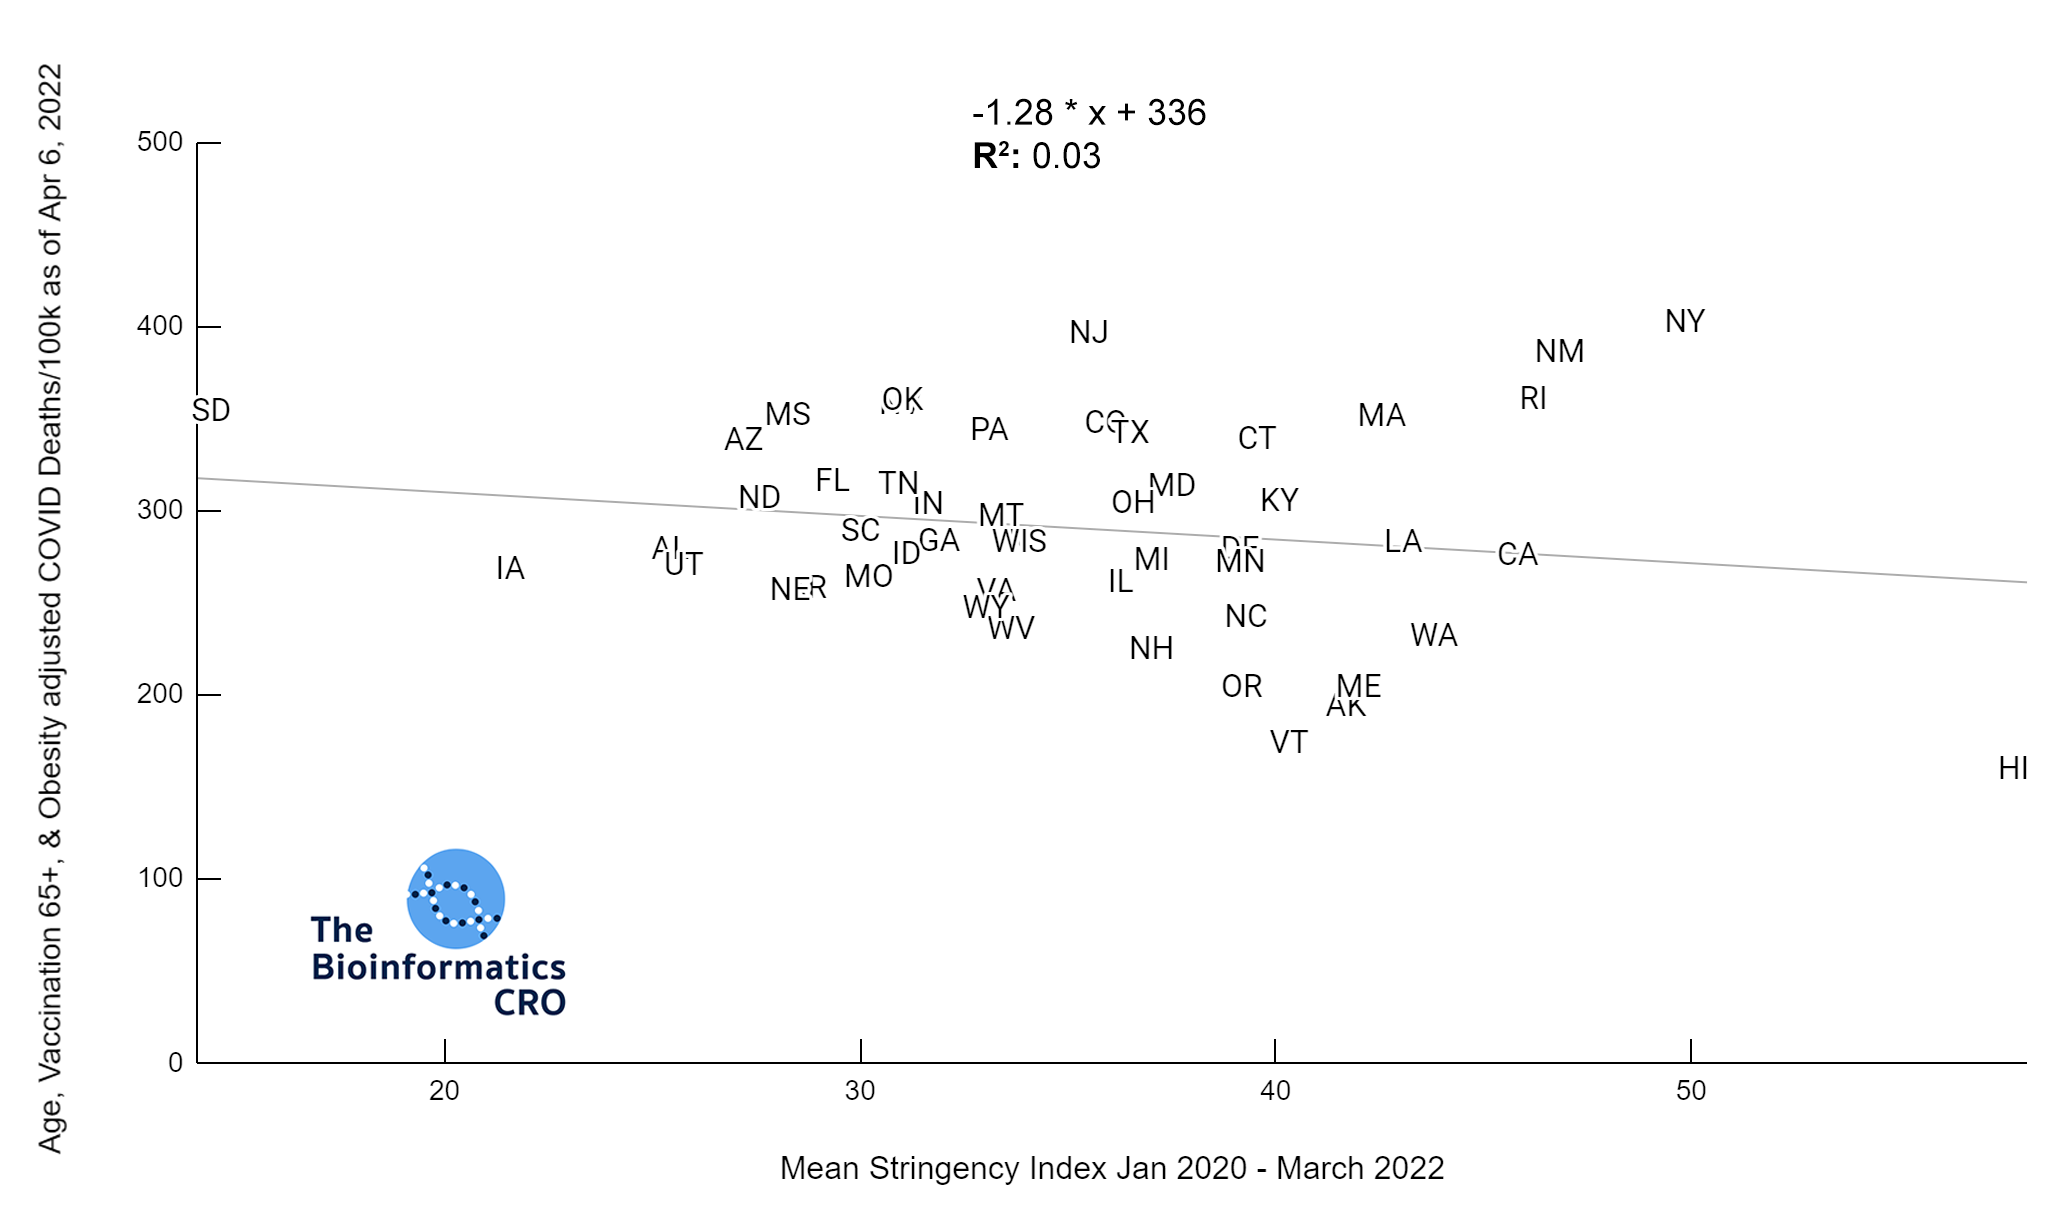 Age, Vaccination Over 65, & Obesity adjusted COVID deaths versus Mean Stringency Index Jan 2020-Mar 2022 | y = -1.28 * x + 336 | R^2 = 0.03